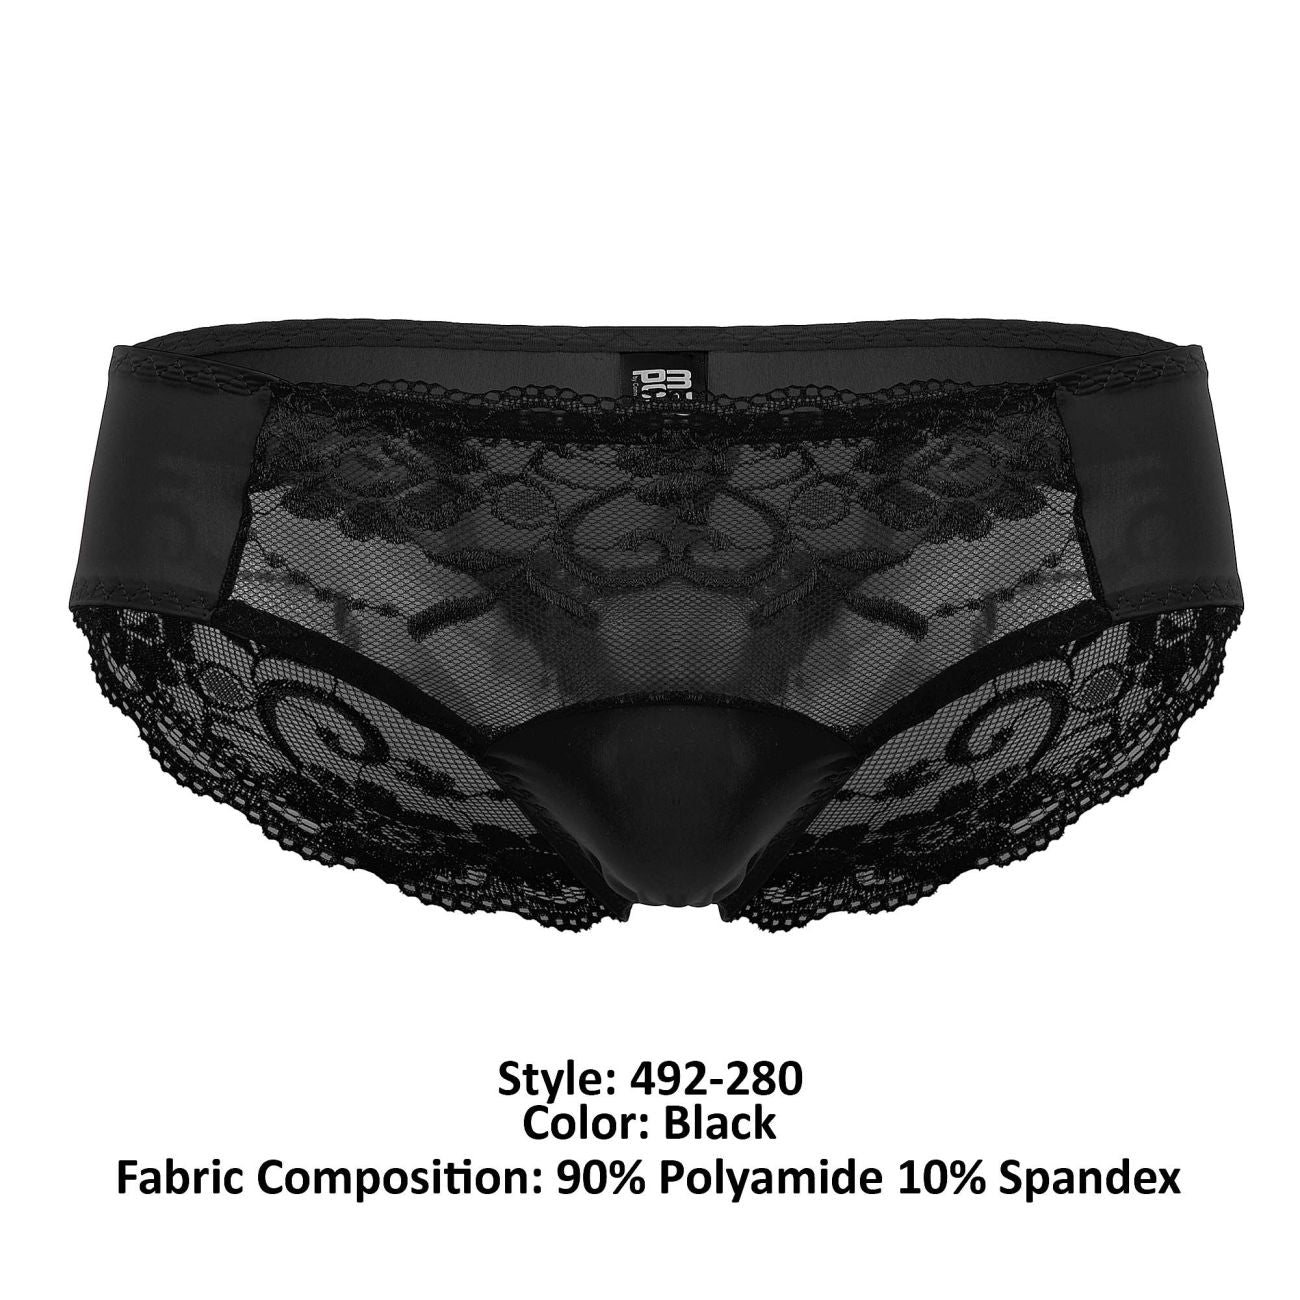 Male Power 492-280 Sassy Lace Bikini Solid Pouch Black